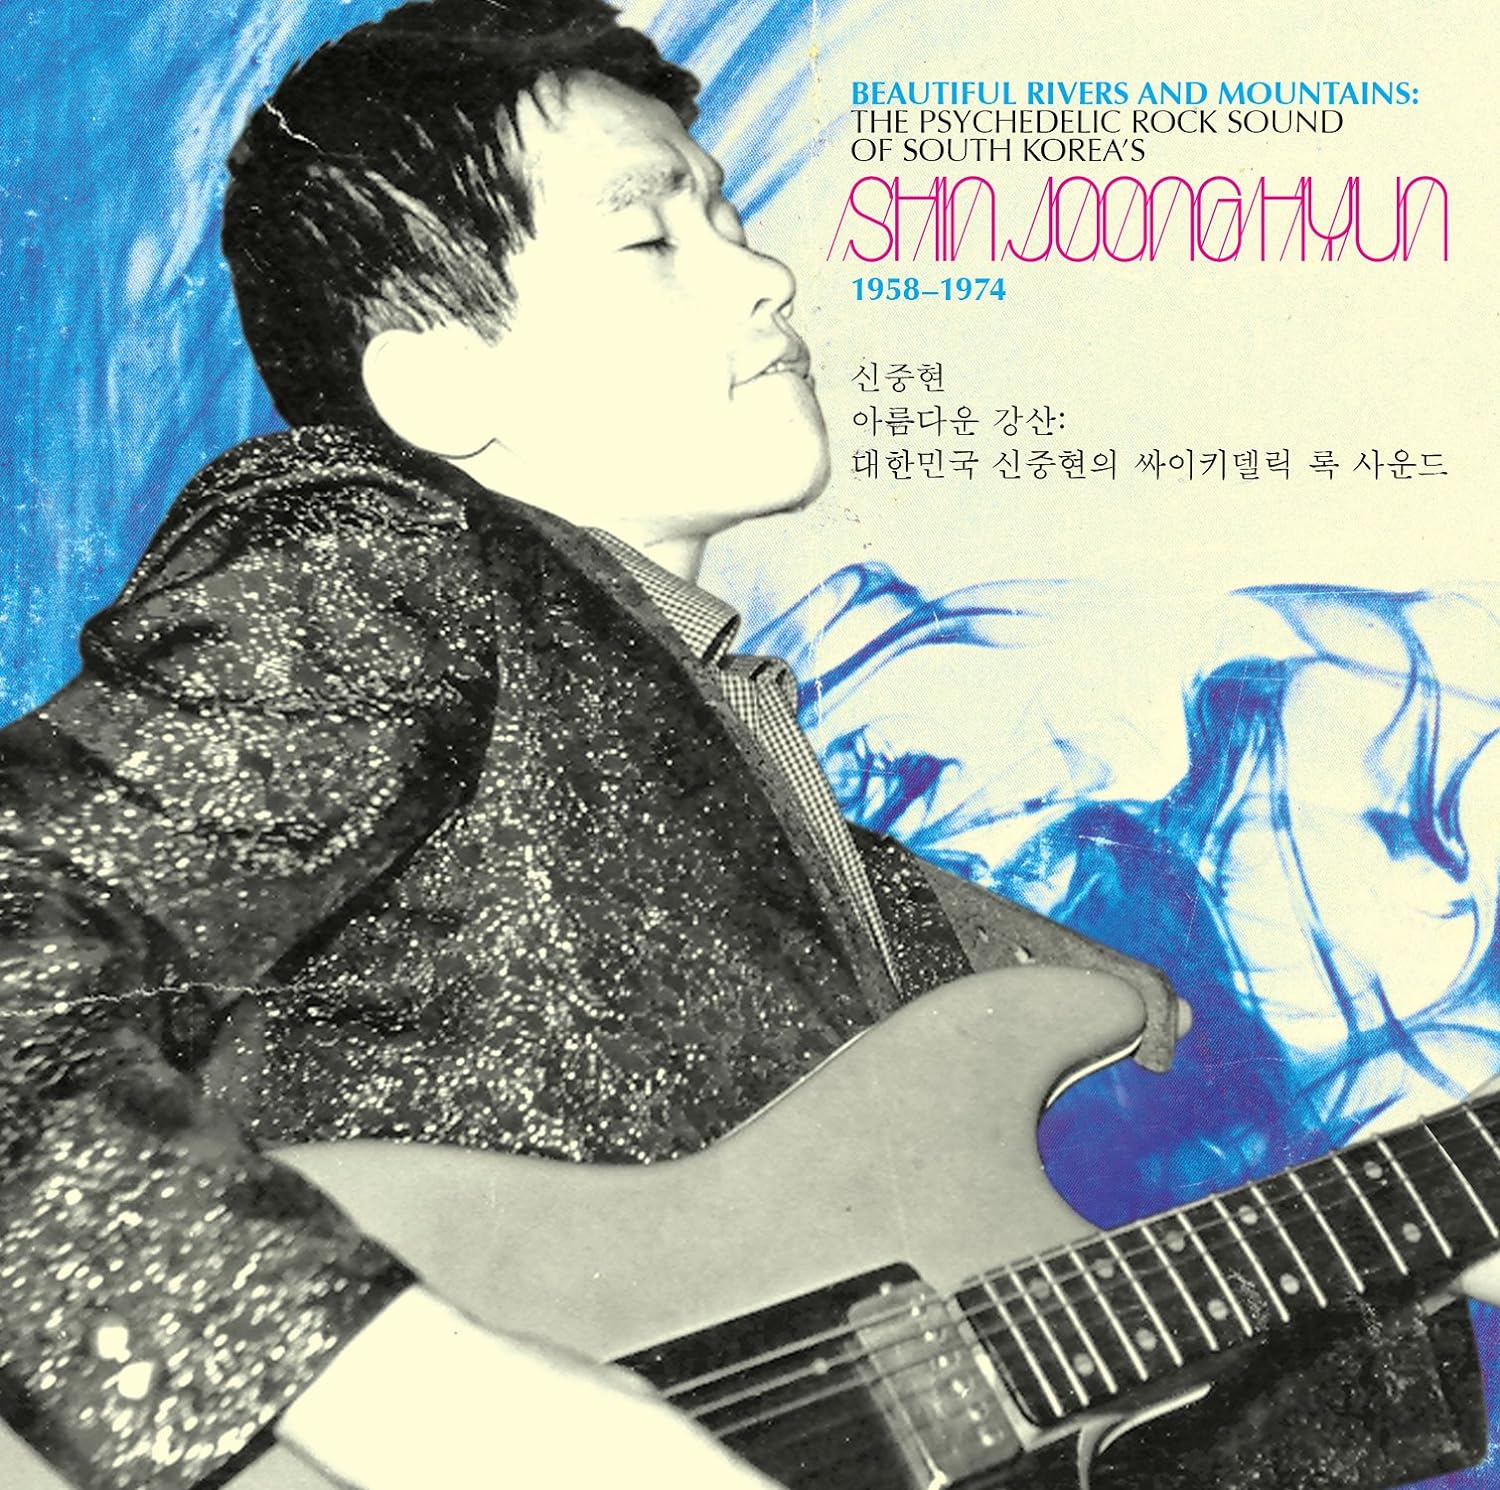 SHIN JOONG HYUN - Beautiful Rivers And Mountains: The Psychedelic Rock Sound Of South Korea's Shin Joong Hyun 1958-74 - 2LP - Blue with Black Splatter Vinyl [JUL 5]